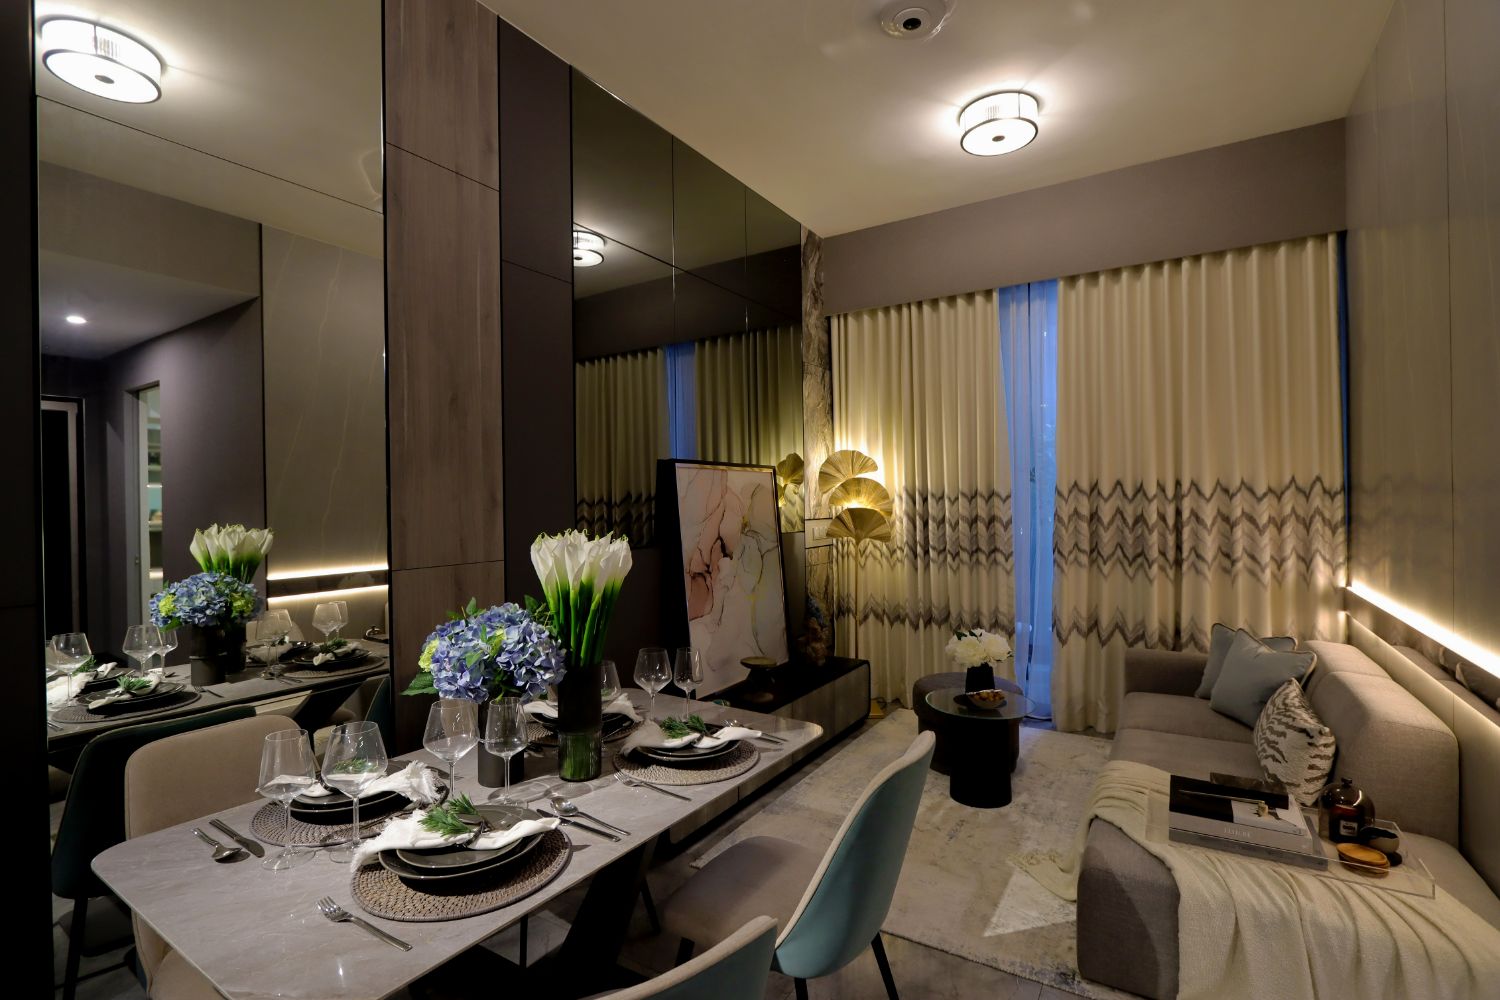 YWA Interior Apartments Midtown Bay 2 Bedroom Showflat Unit LIVING ROOM 001, Design Authority